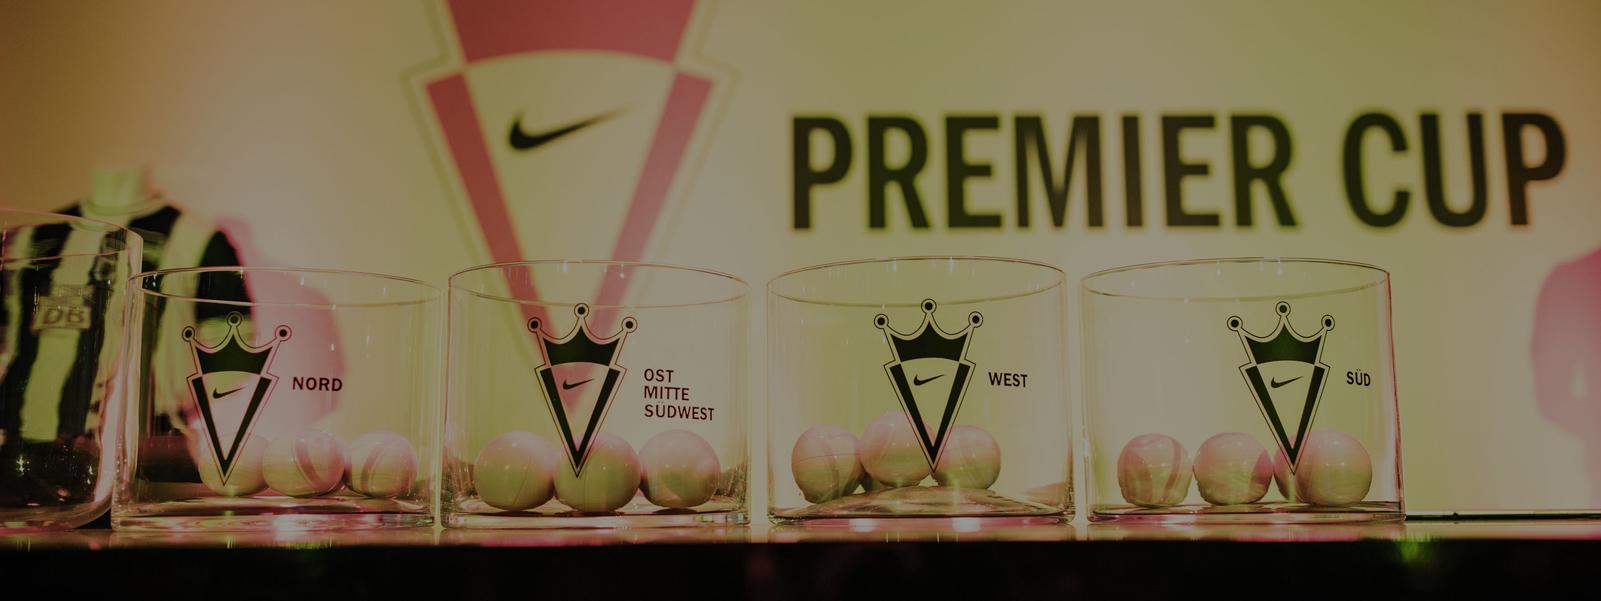 Nike Premier Cup 4attention Sportmarketing